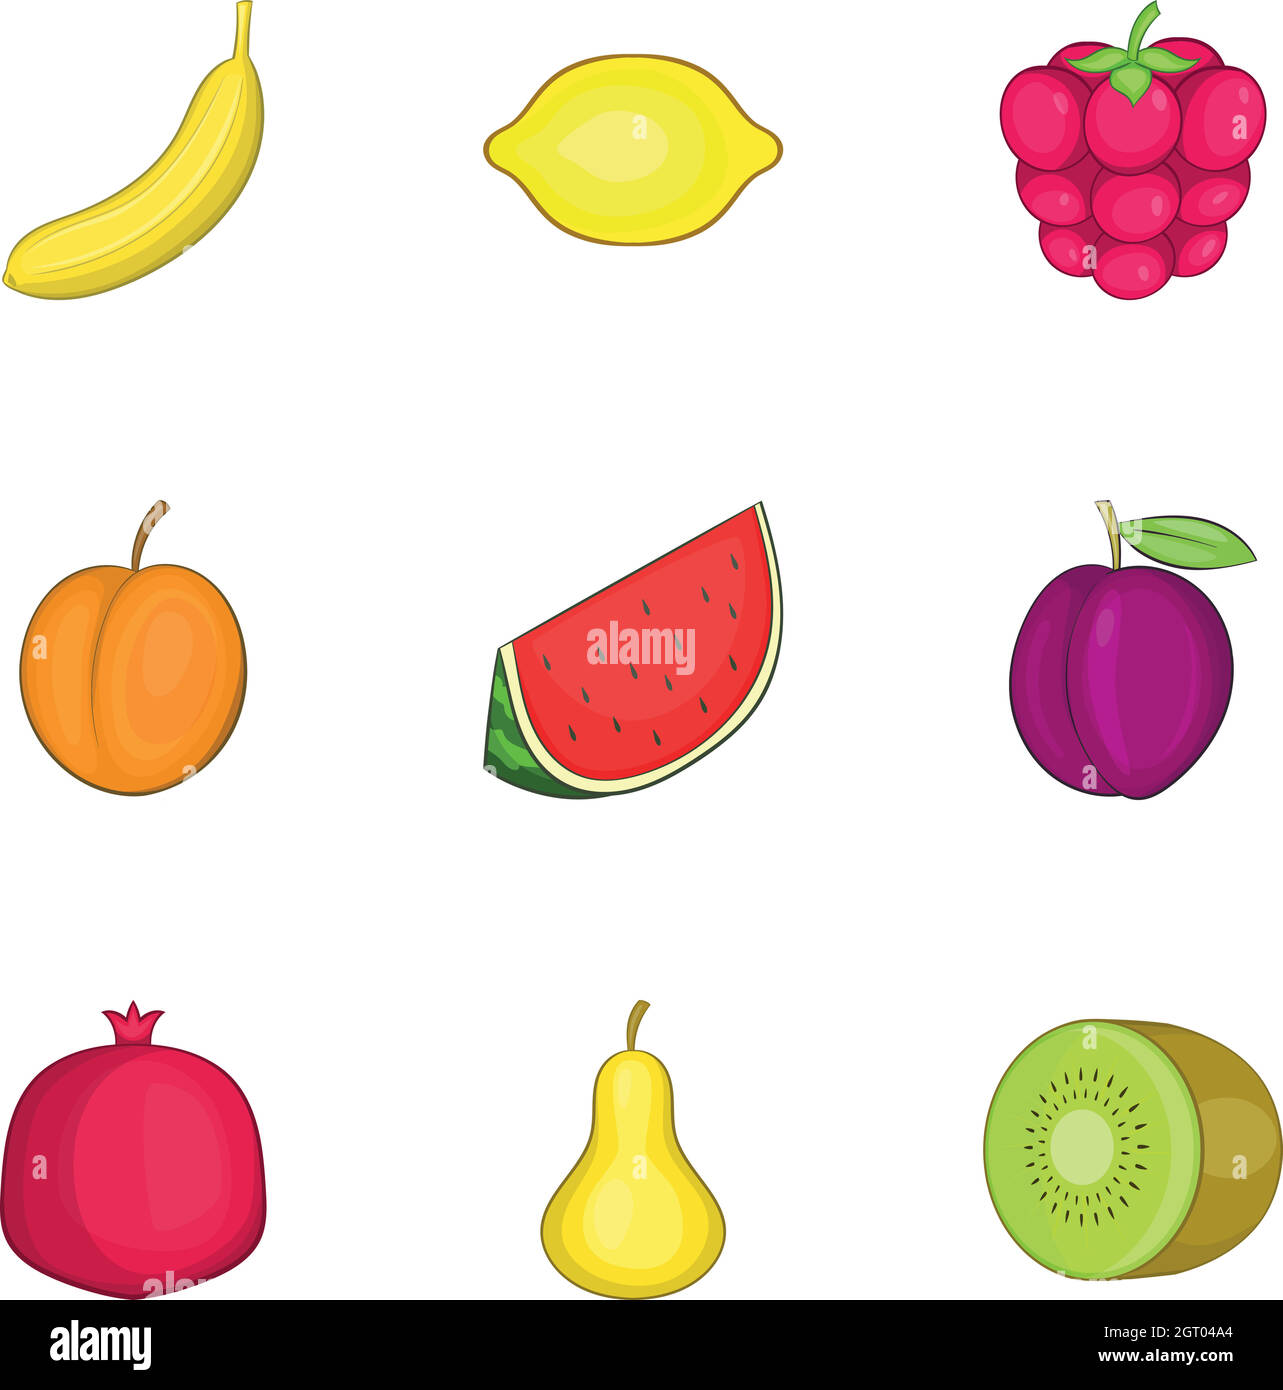 Fruit cartoon hi-res stock photography and images - Alamy